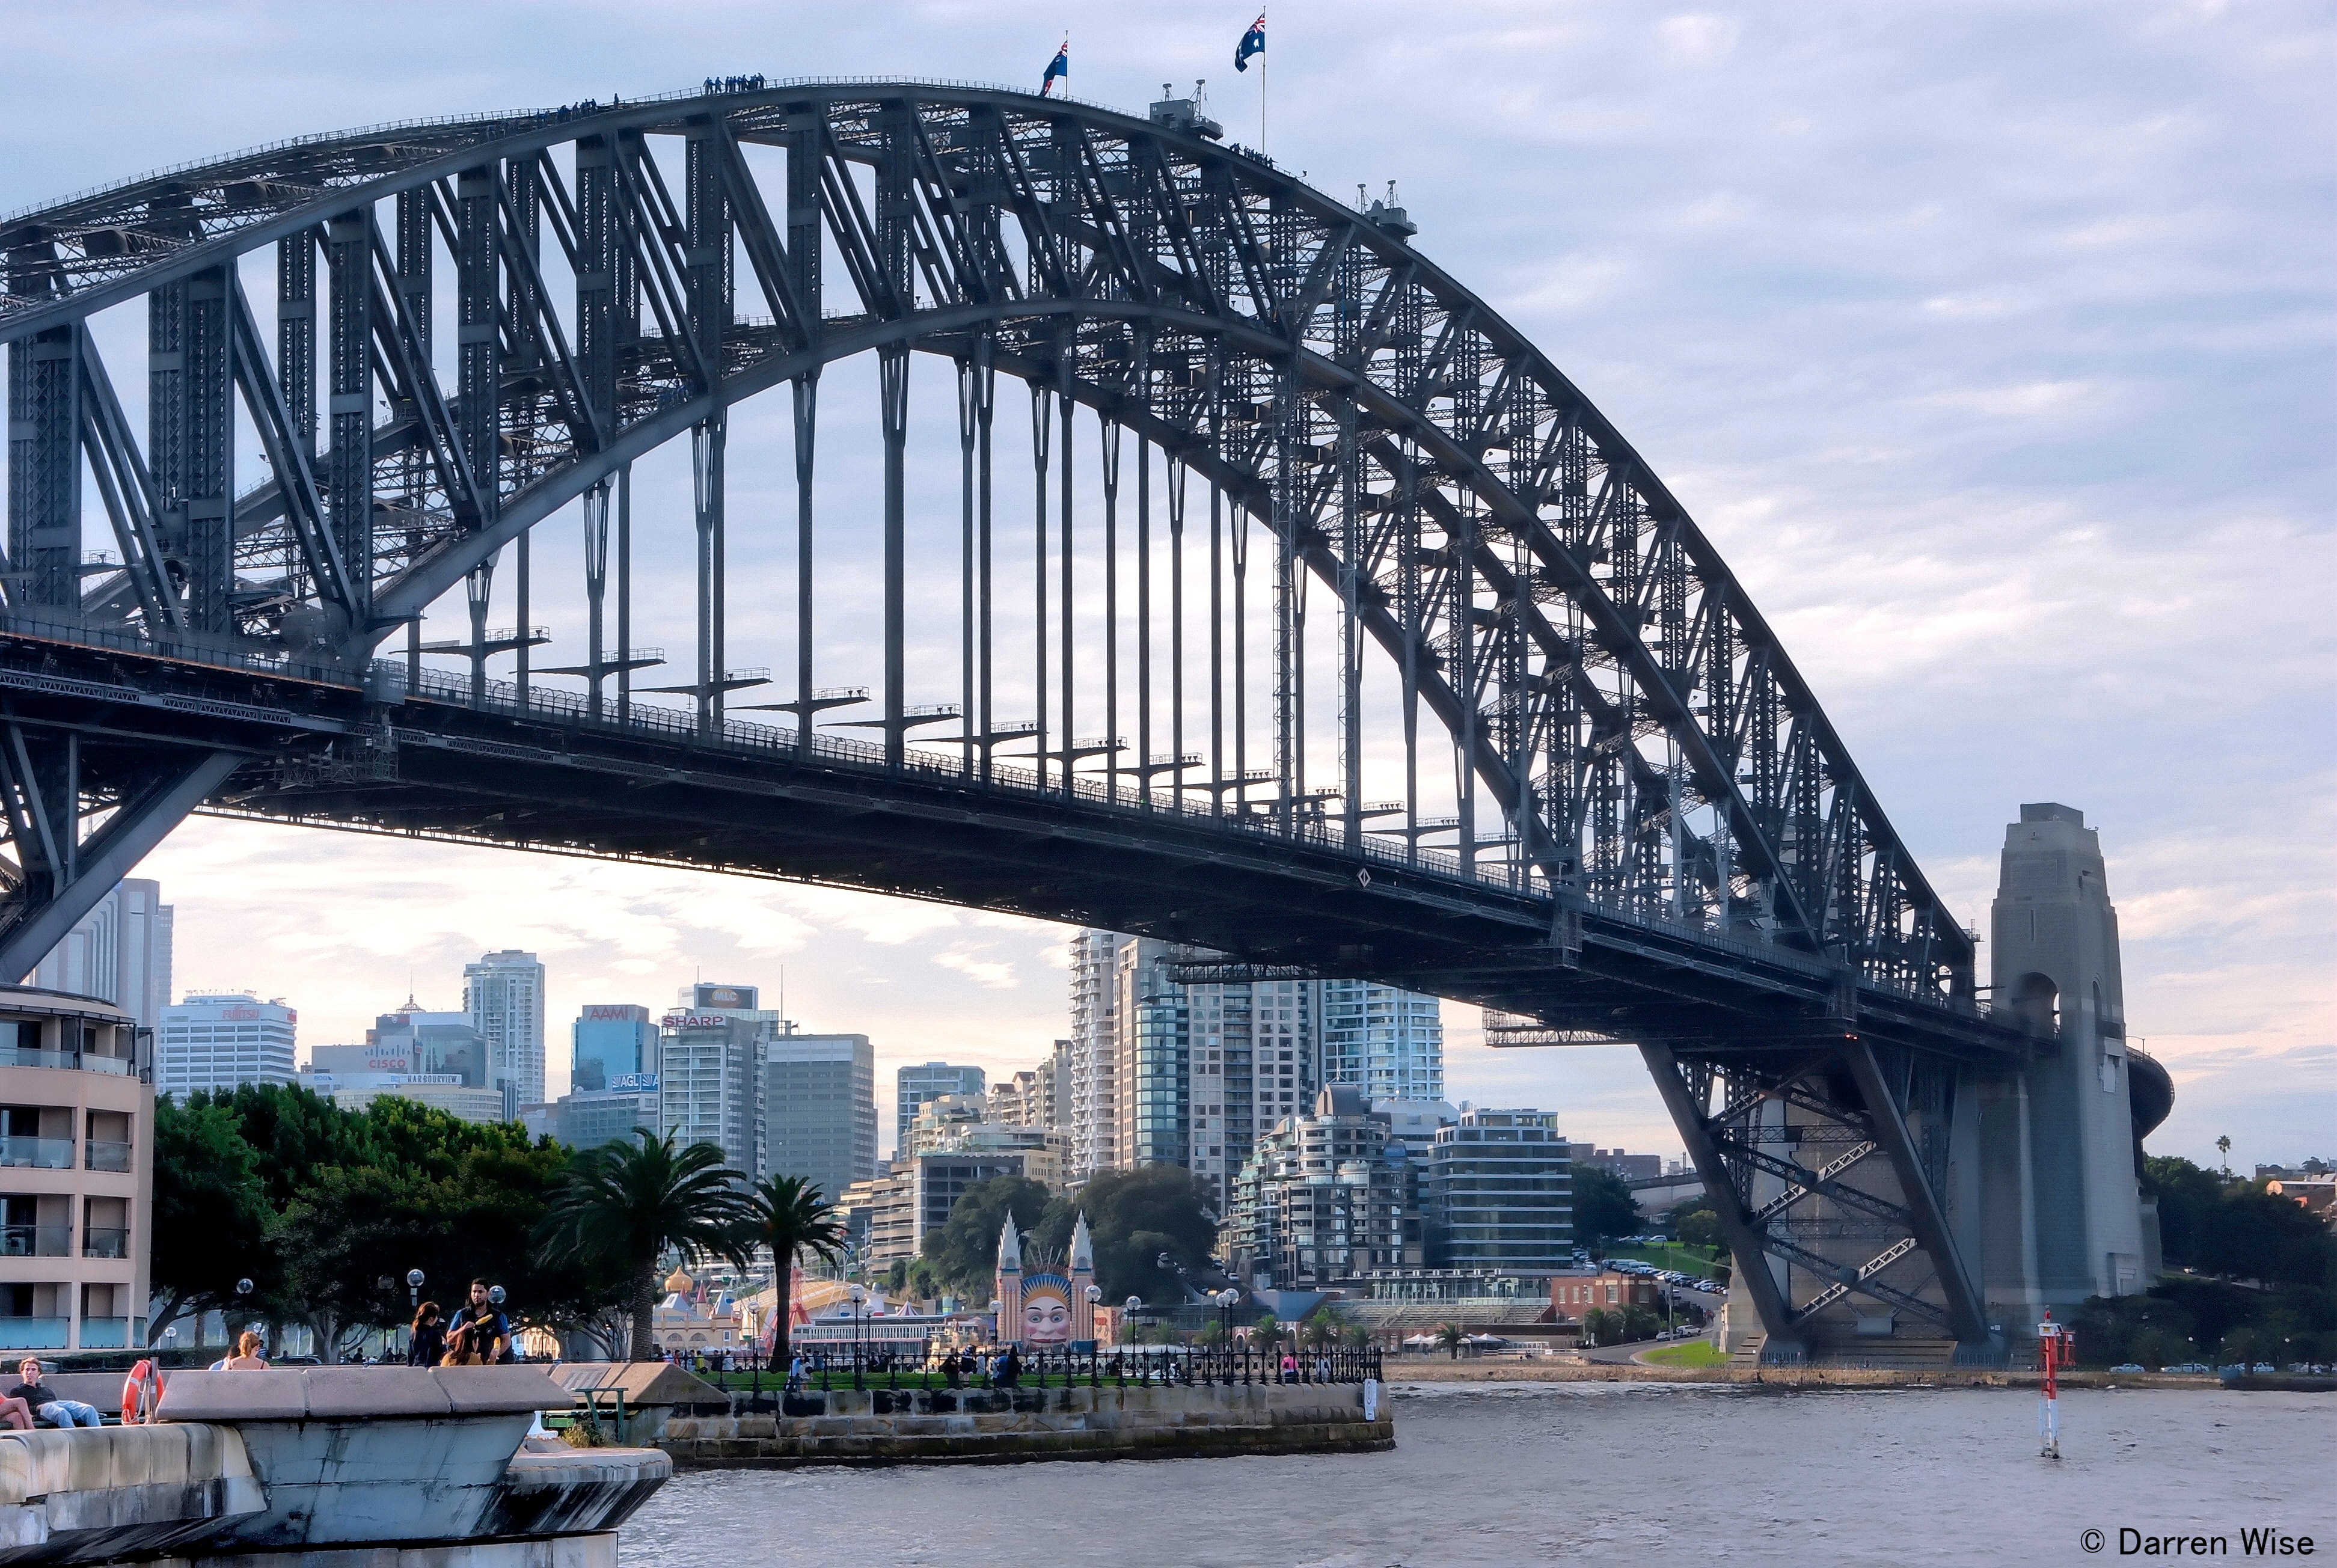 Harbour bridge. Харбор-бридж Сидней. Сиднейский мост Харбор-бридж. Мост Харбор бридж в Австралии. Харбор-бридж (Сидней, Австралия).